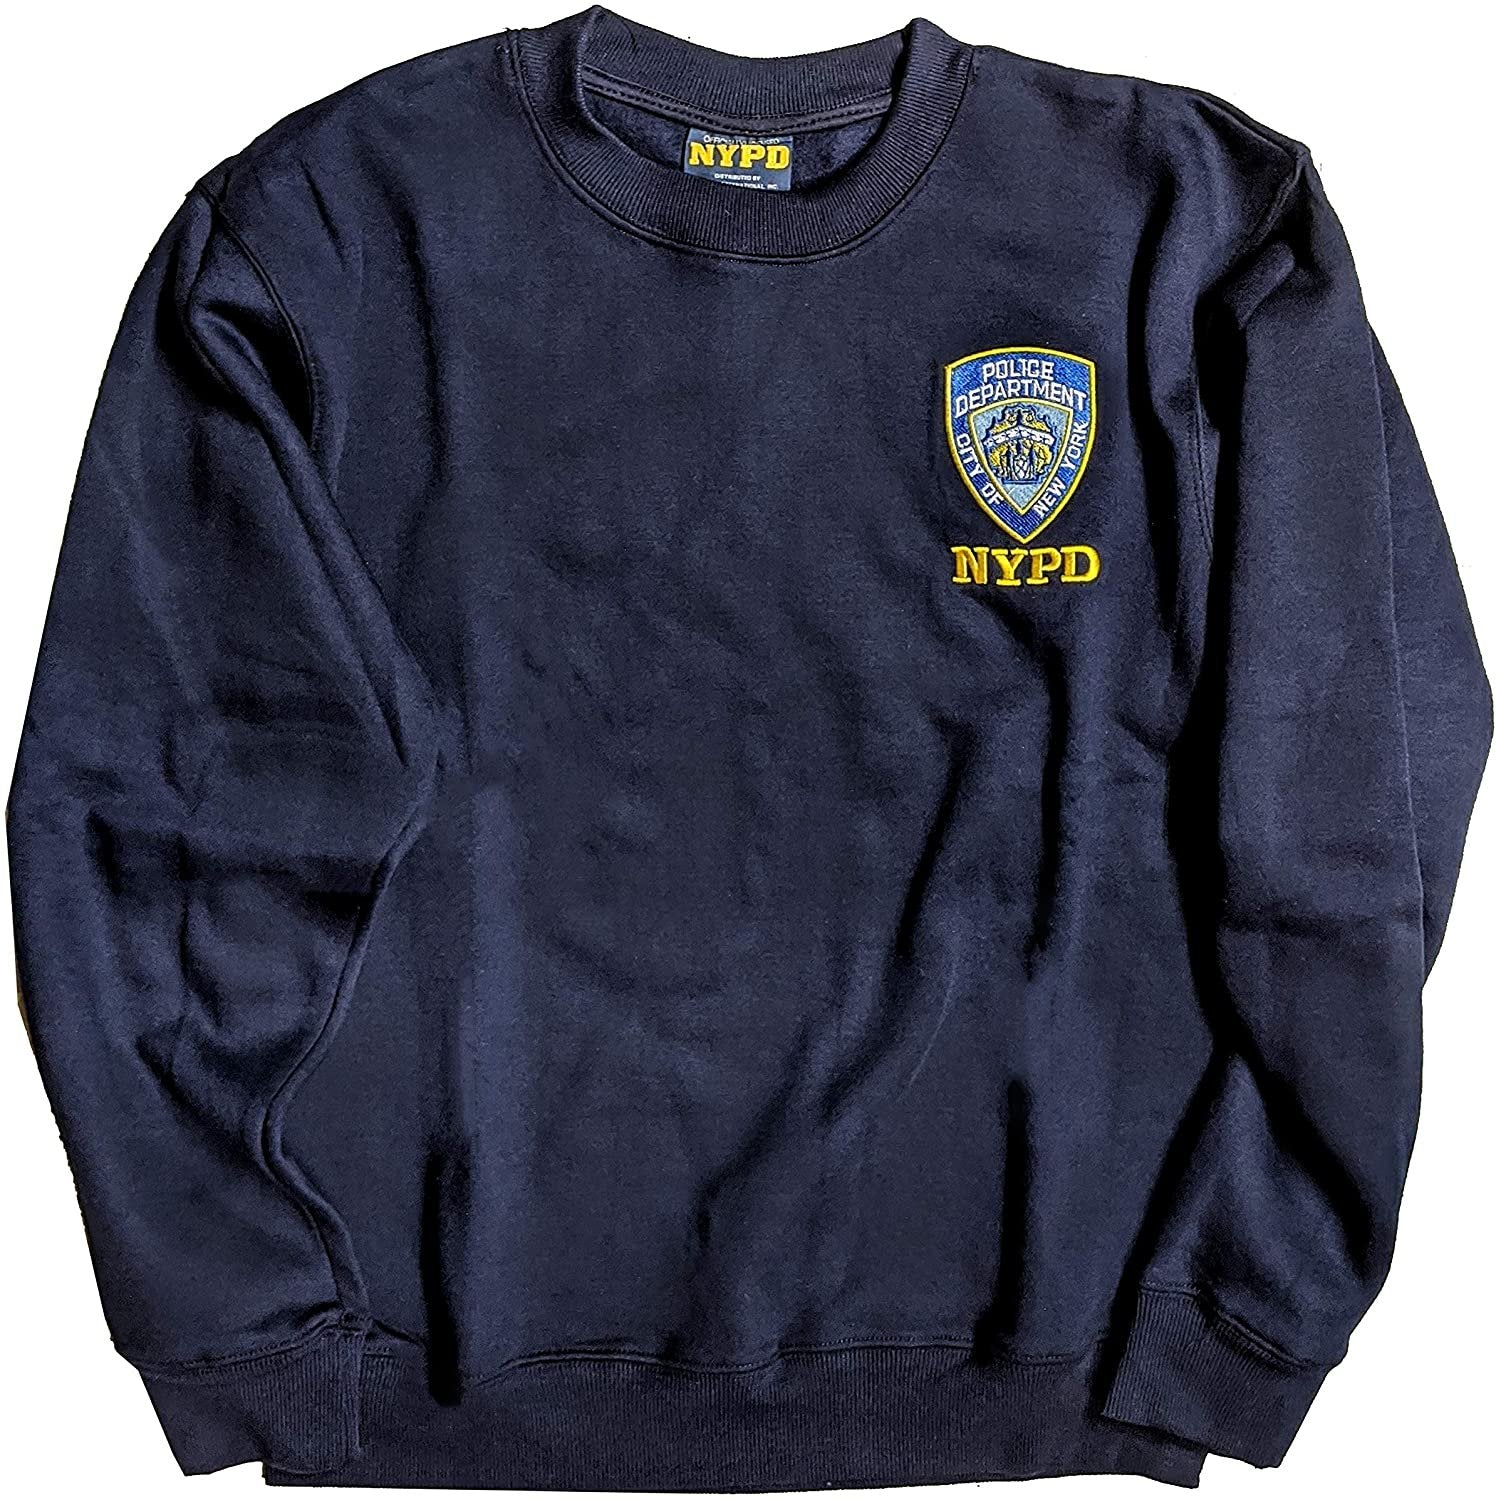 NYPD Men's Crewneck Sweatshirt Navy Blue Officially Licensed